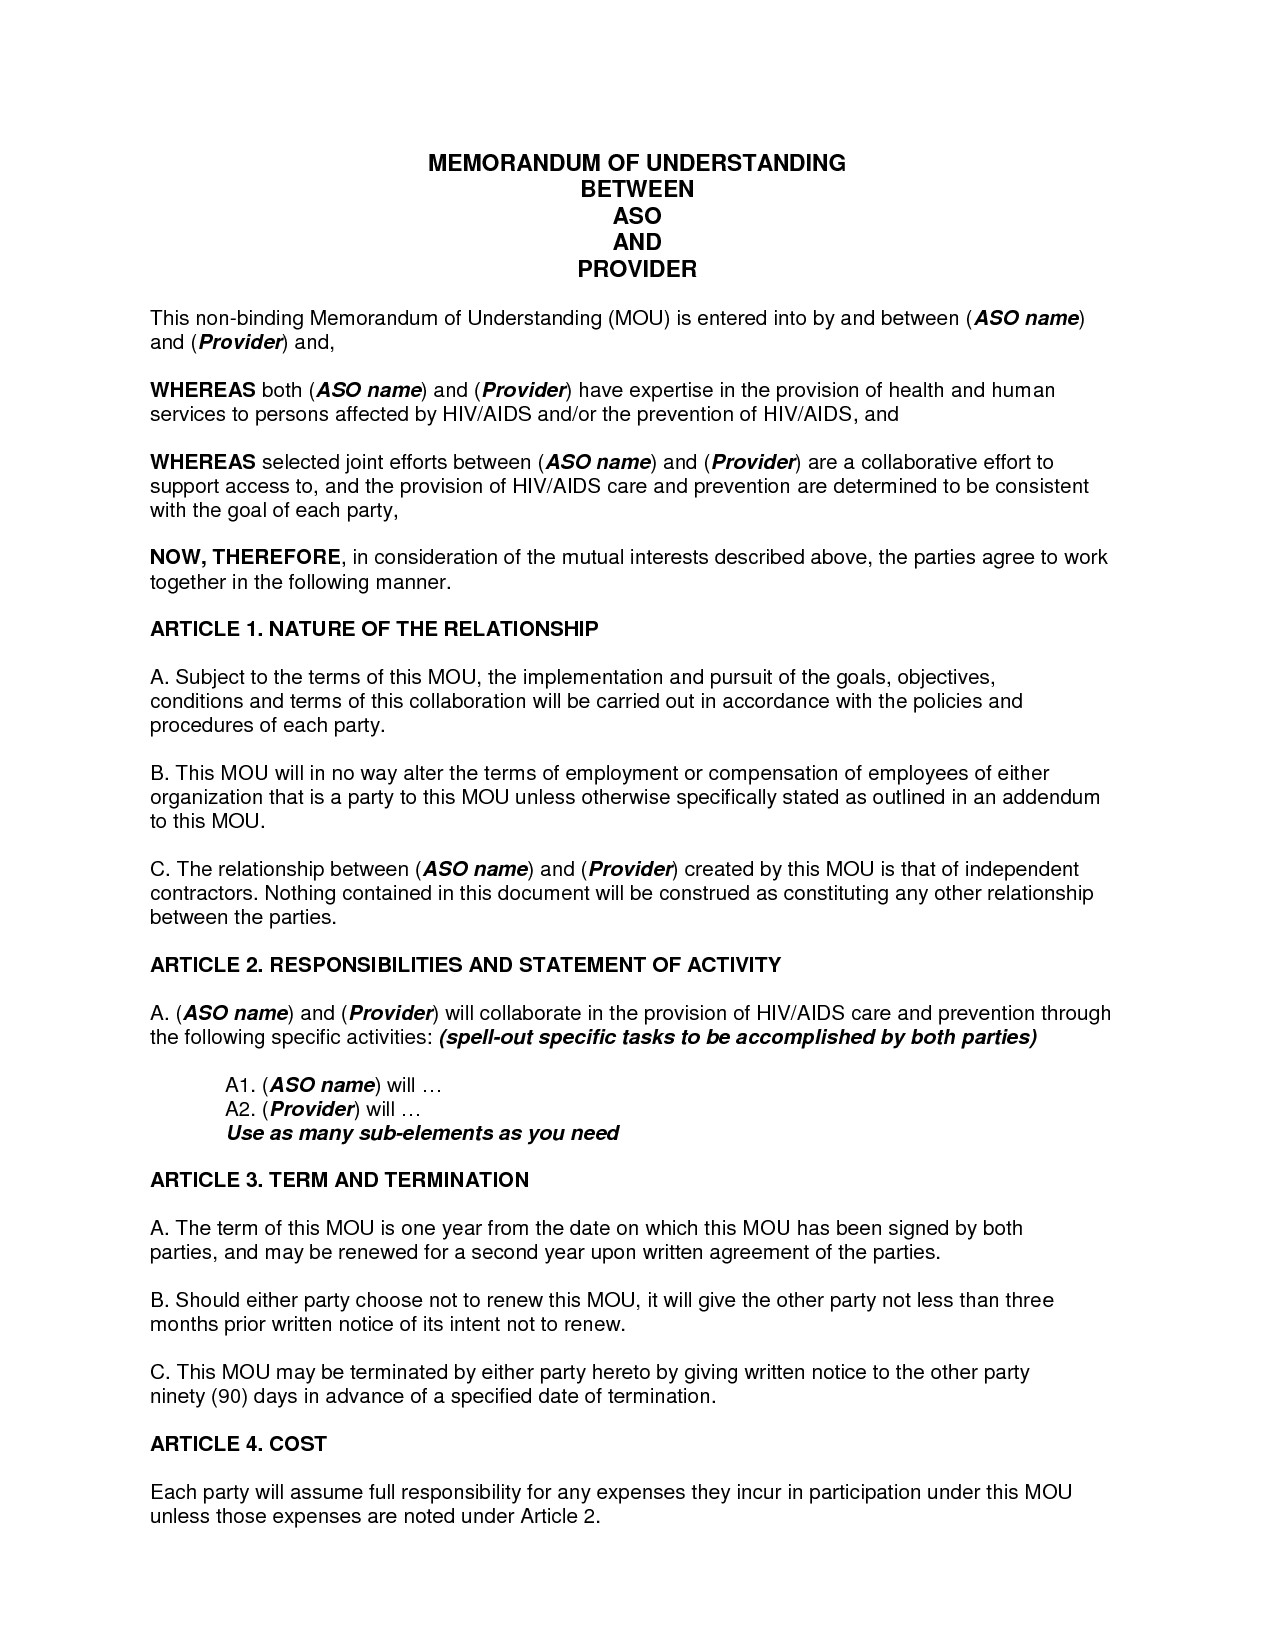 Sample Memorandum Of Understanding Business Partnership DOC By Document